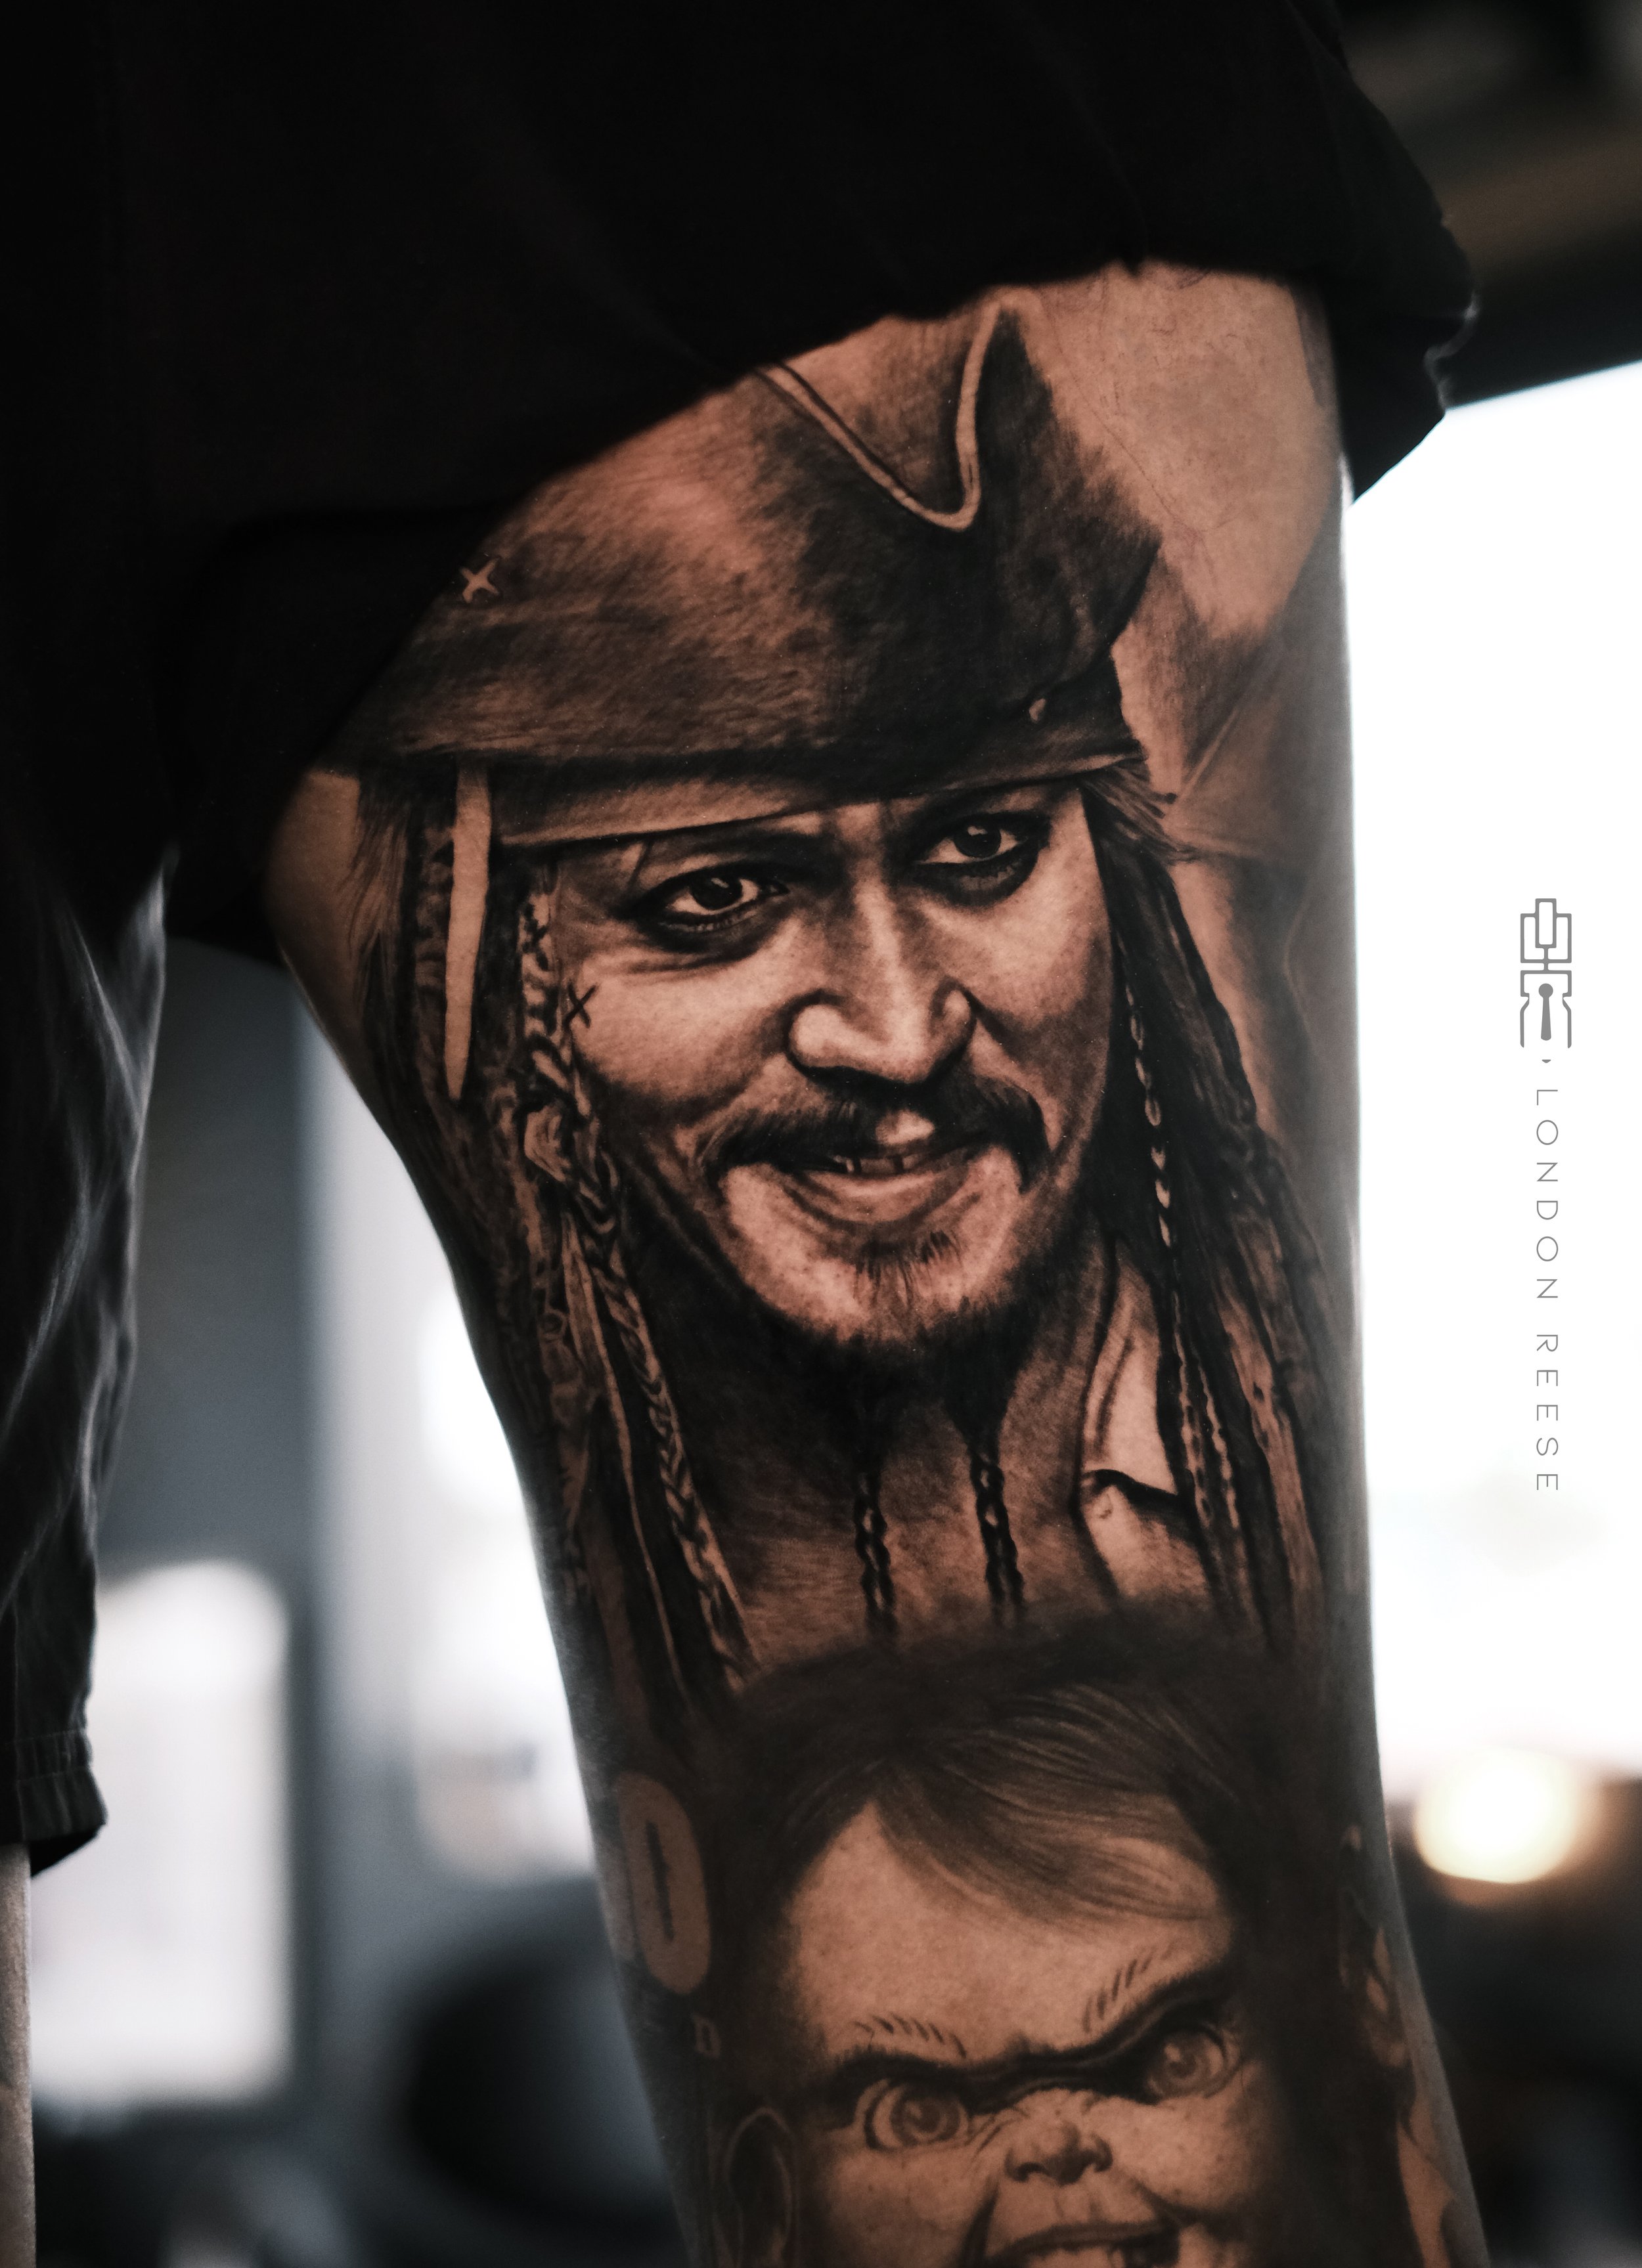 jack sparrow black and grey tattoo.jpg